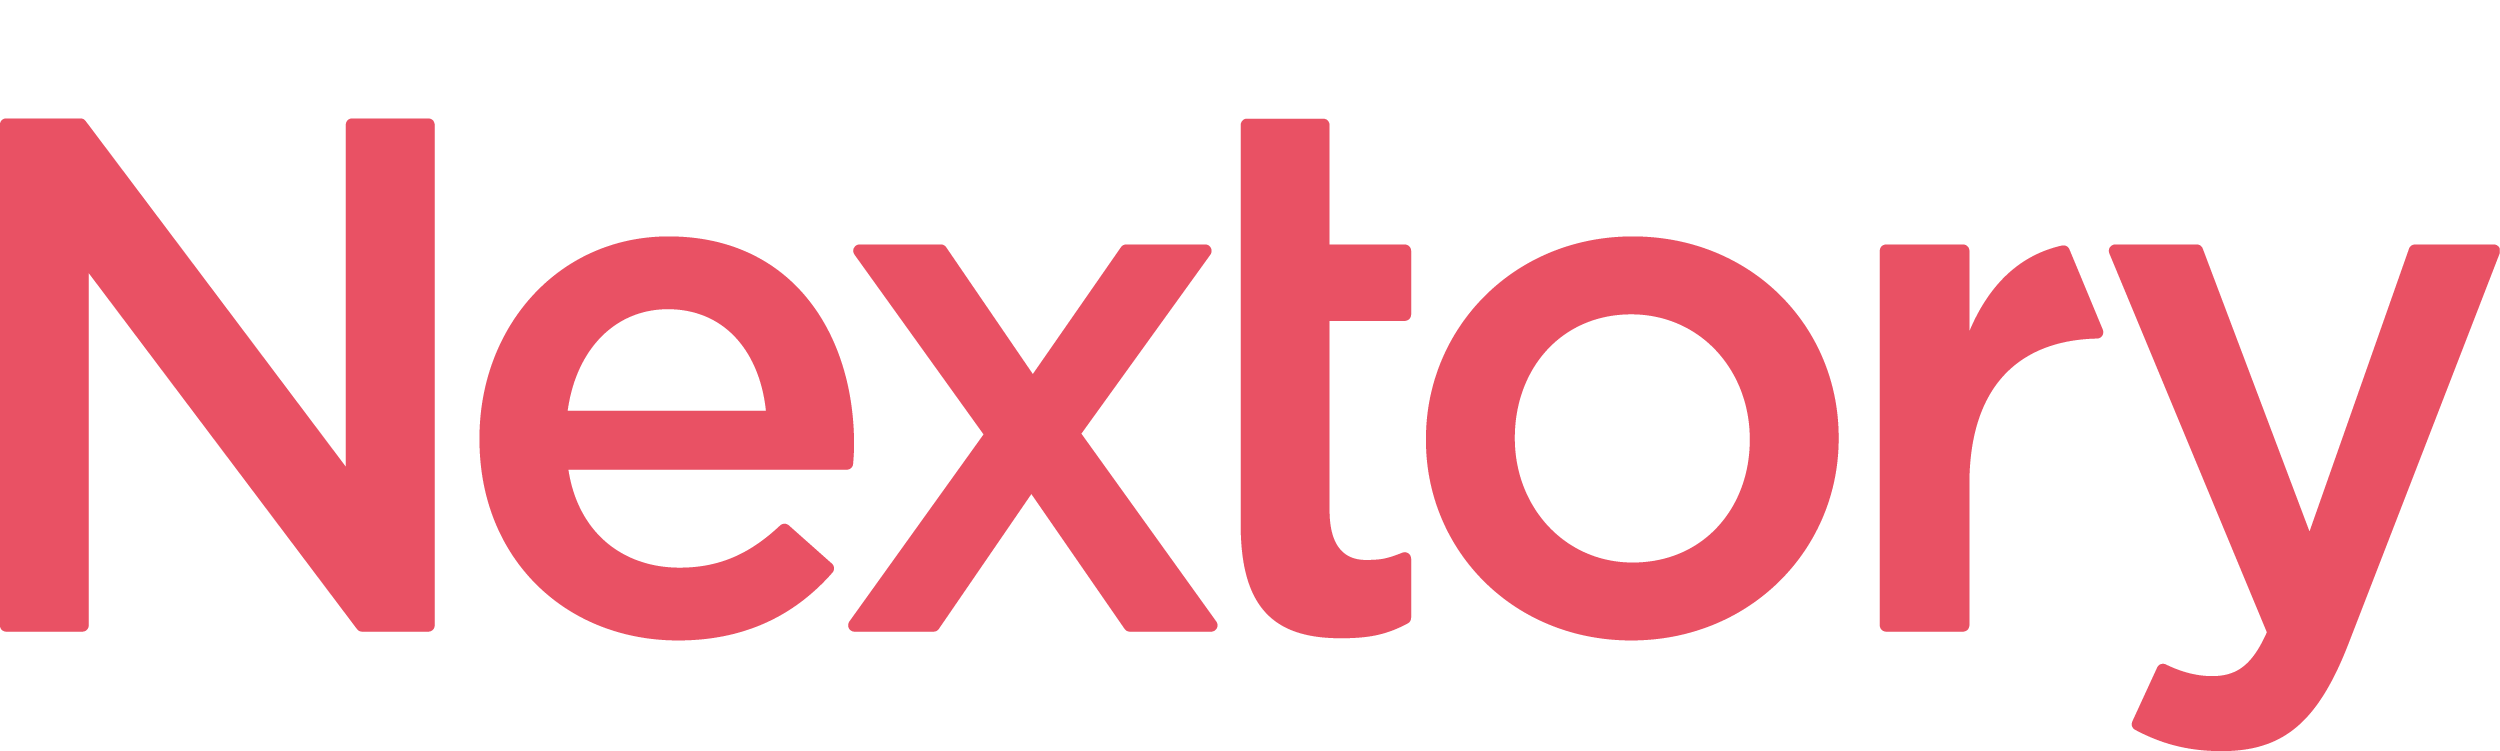 Nextory Logo